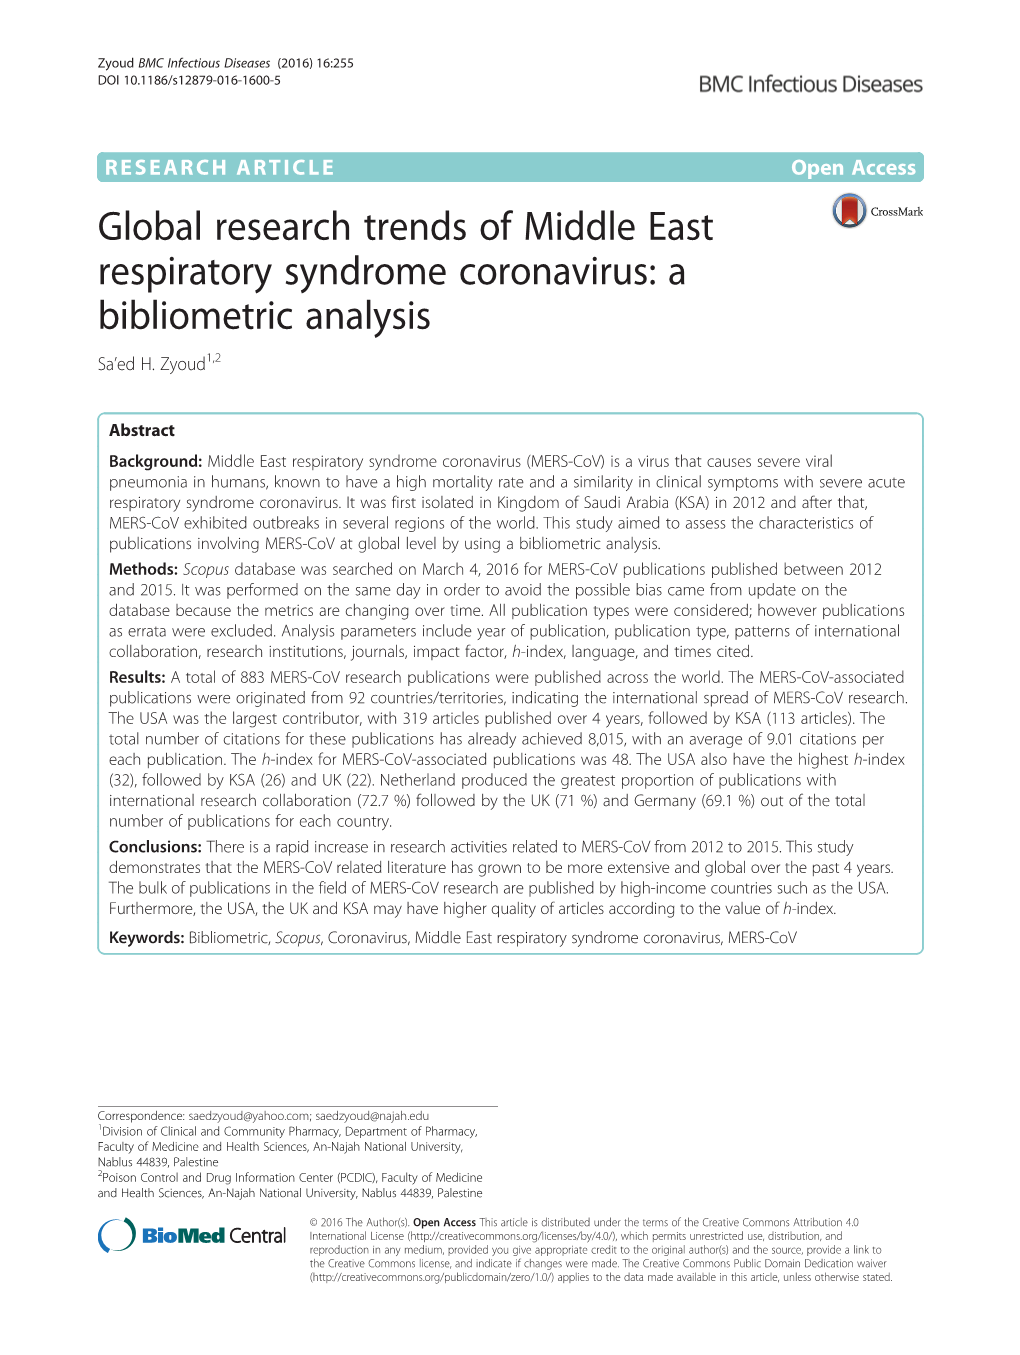 Global Research Trends of Middle East Respiratory Syndrome Coronavirus: a Bibliometric Analysis Sa’Ed H